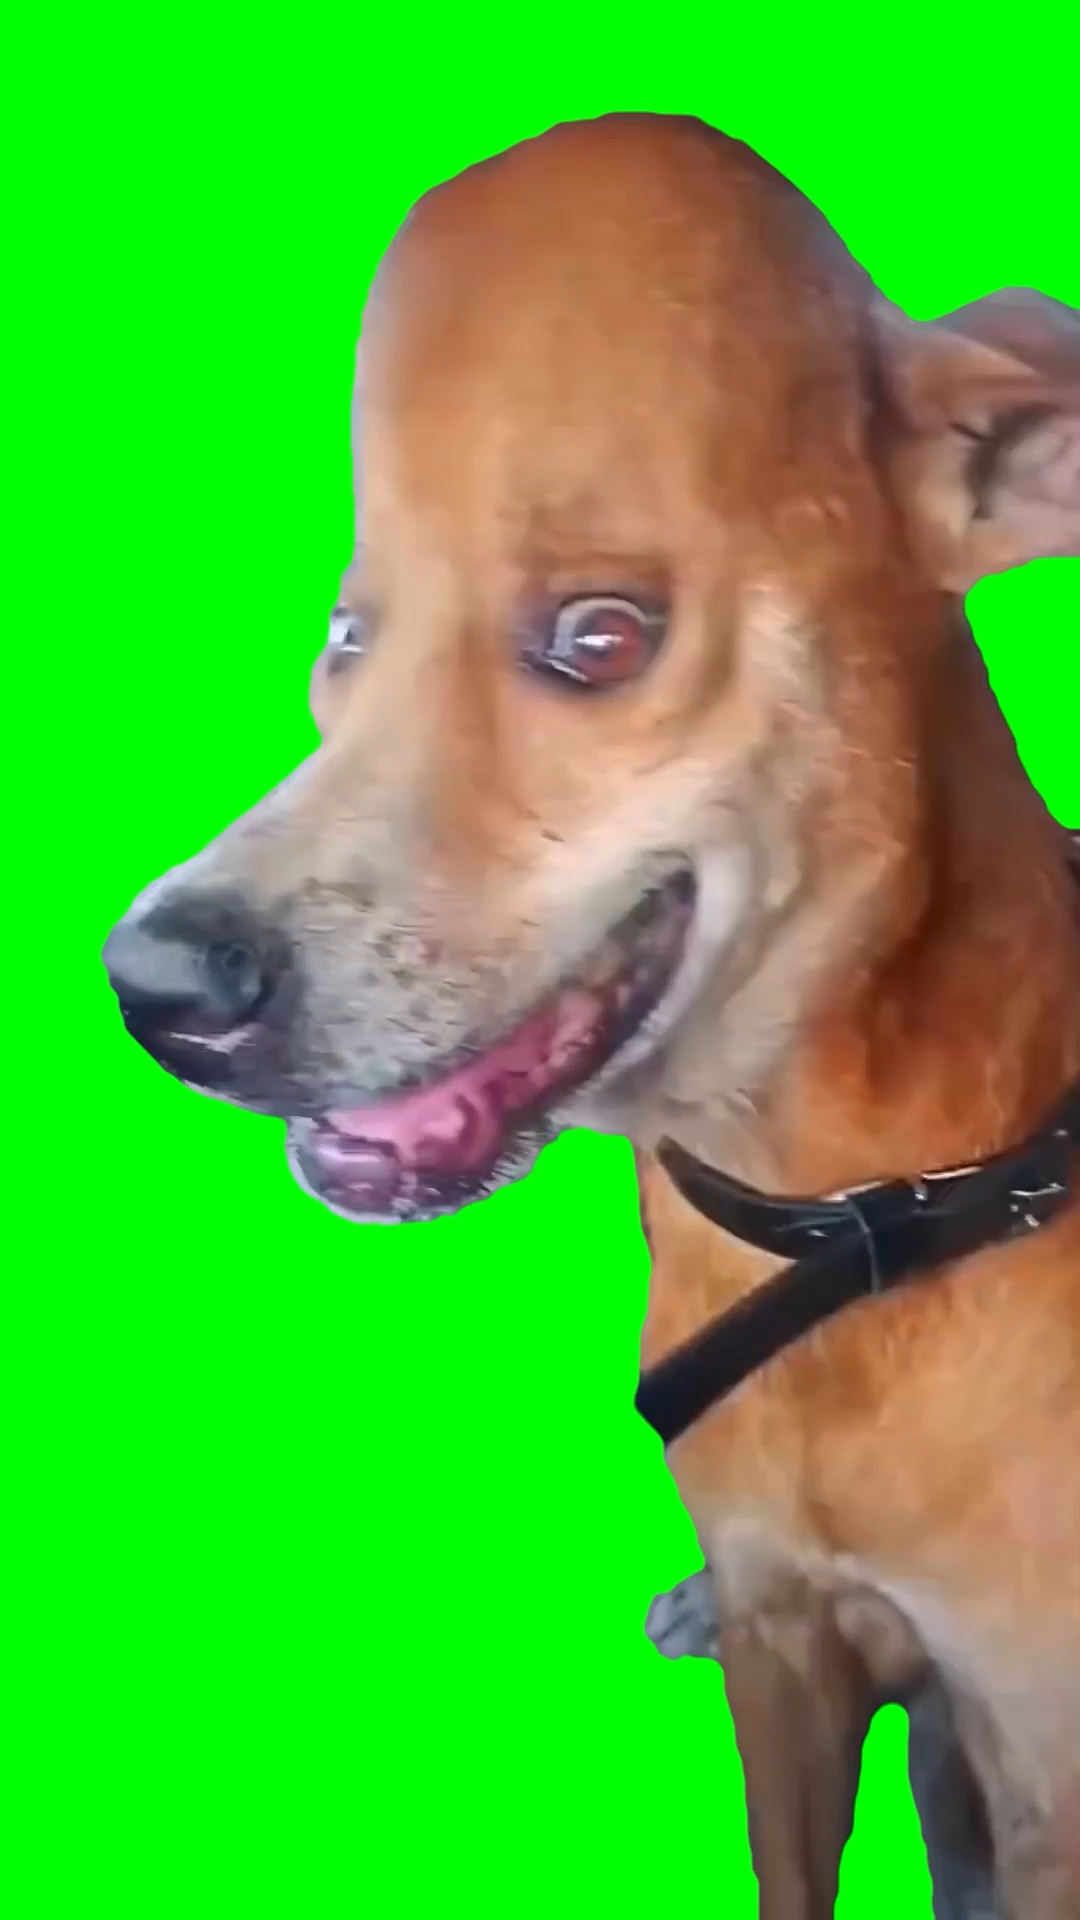 Smiling Big Head Dog  (Green Screen)